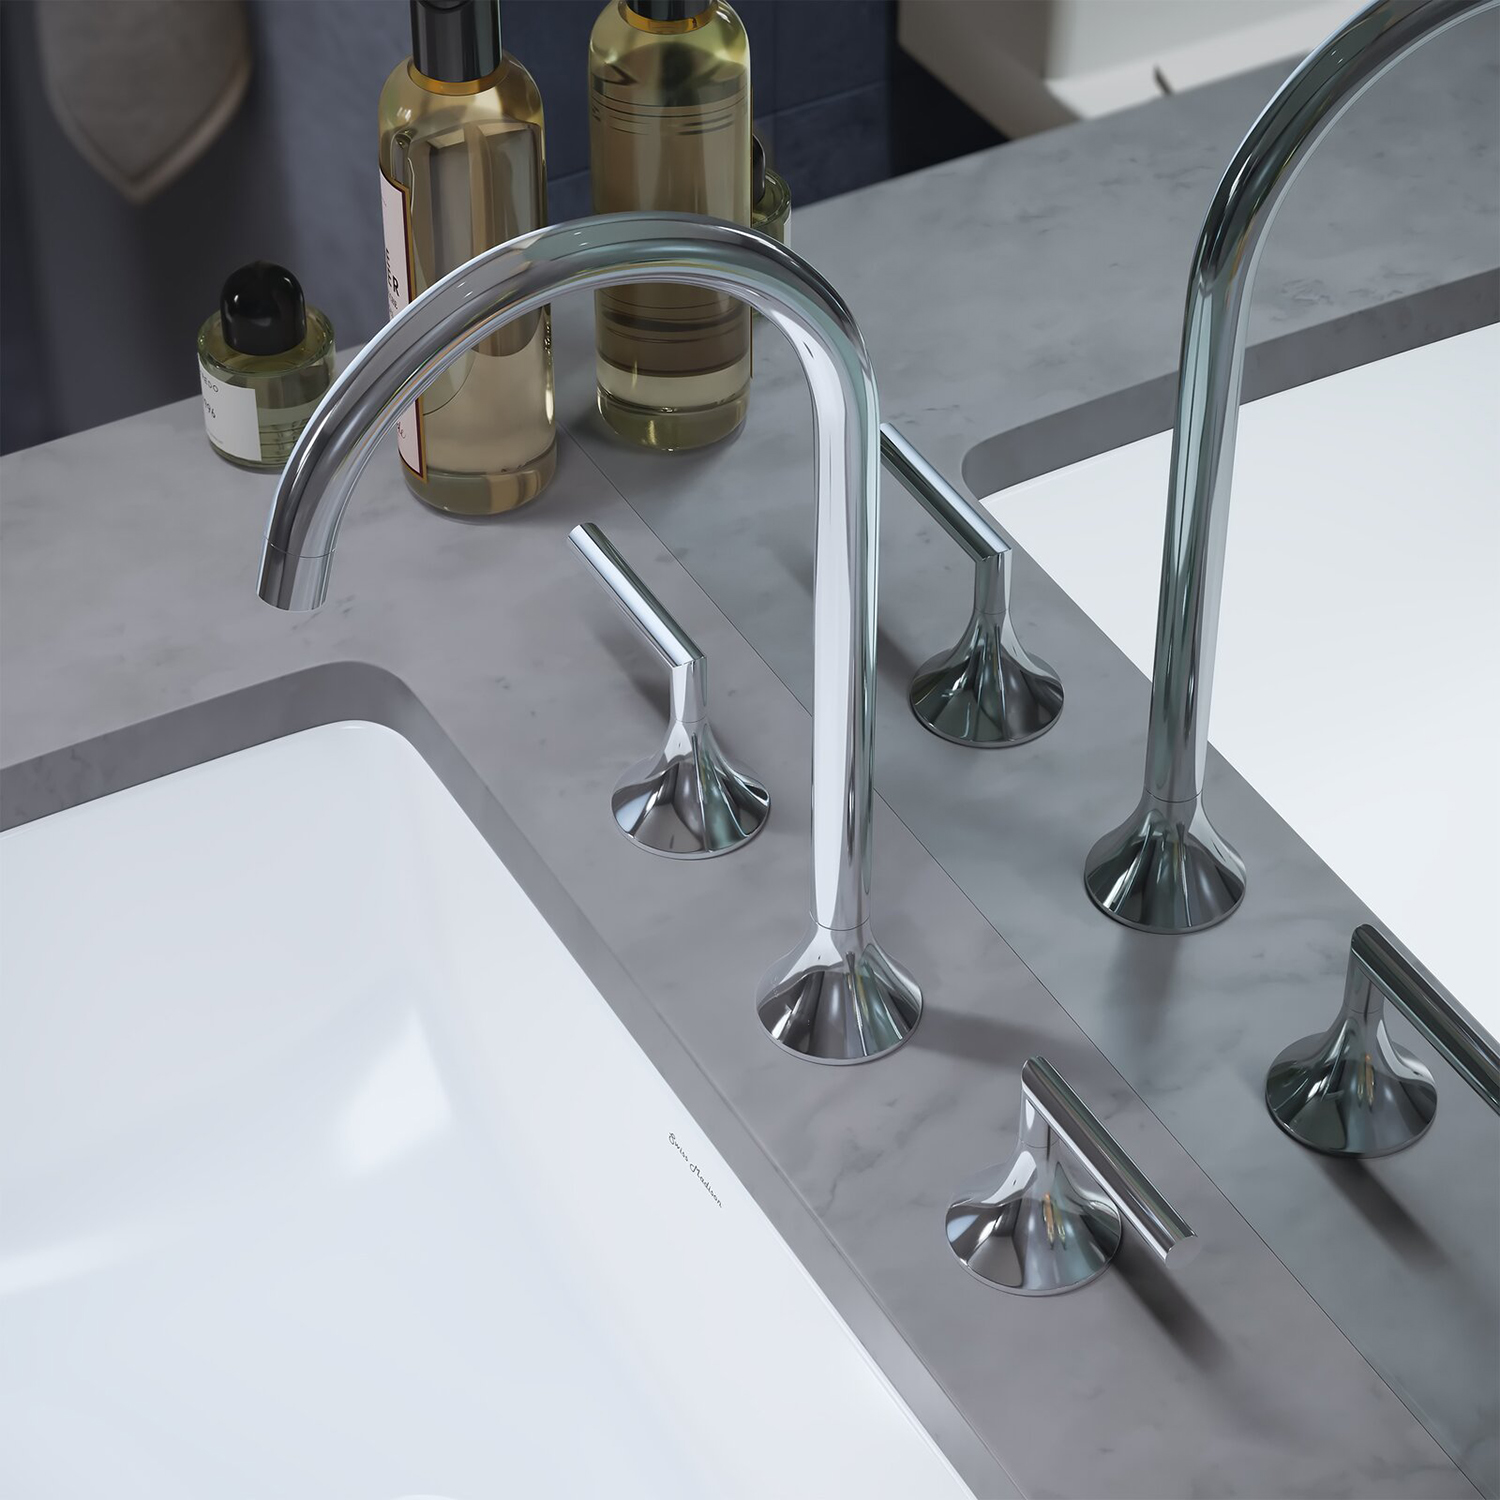 Aquacubic Chrome Commercial Bathroom Two Handle Widespread Lavatory Deck Mount Basin Mixer Tap Faucet